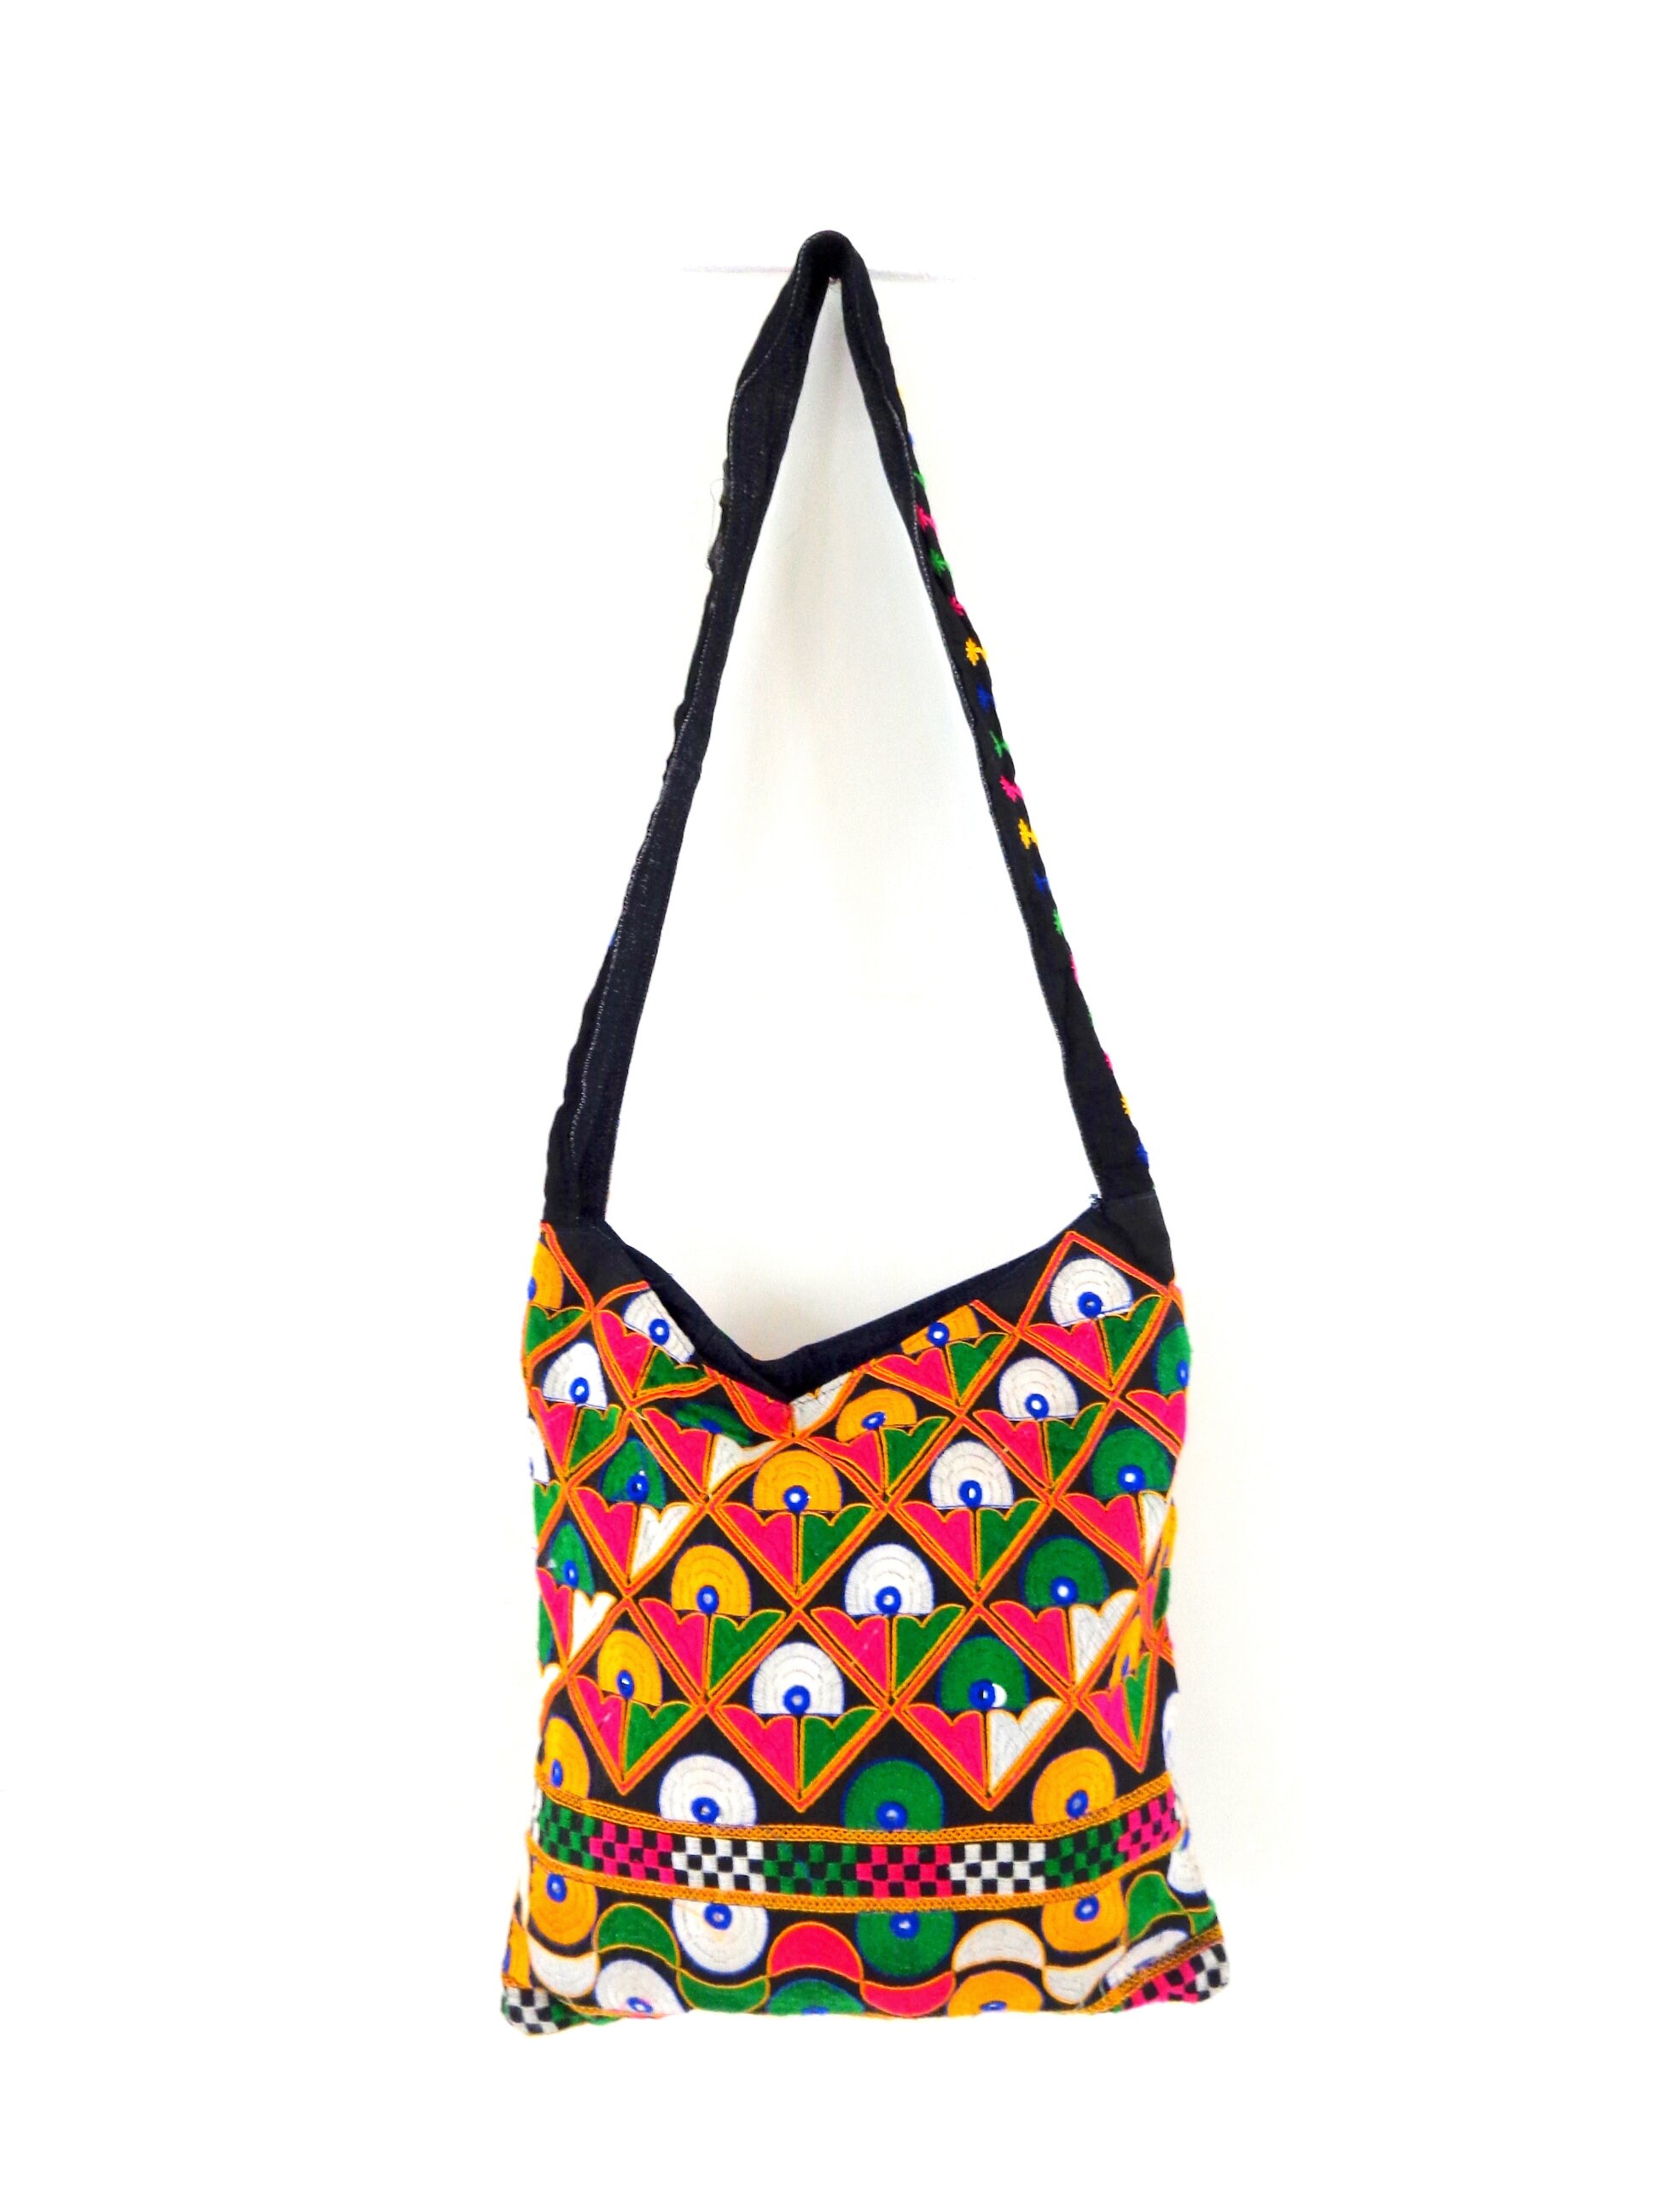 Kutch Mirror Work Cross Body Bag Rabari Embroidery Vintage | Etsy